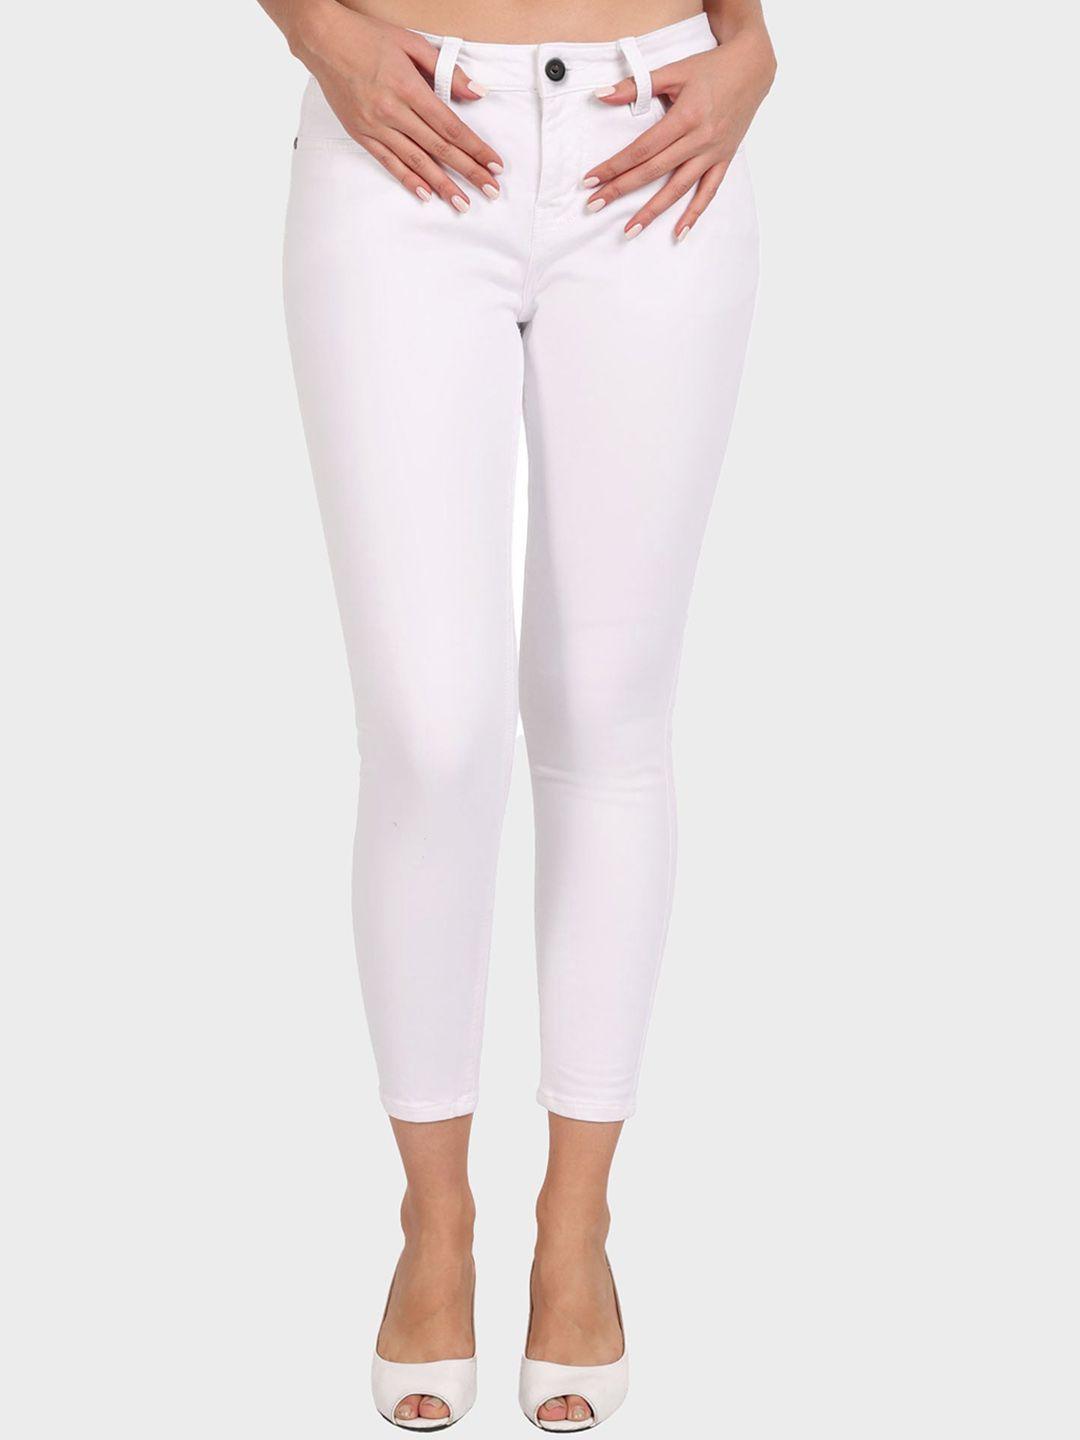 dressberry-women-white-mid-rise-skinny-fit-denim-jeans